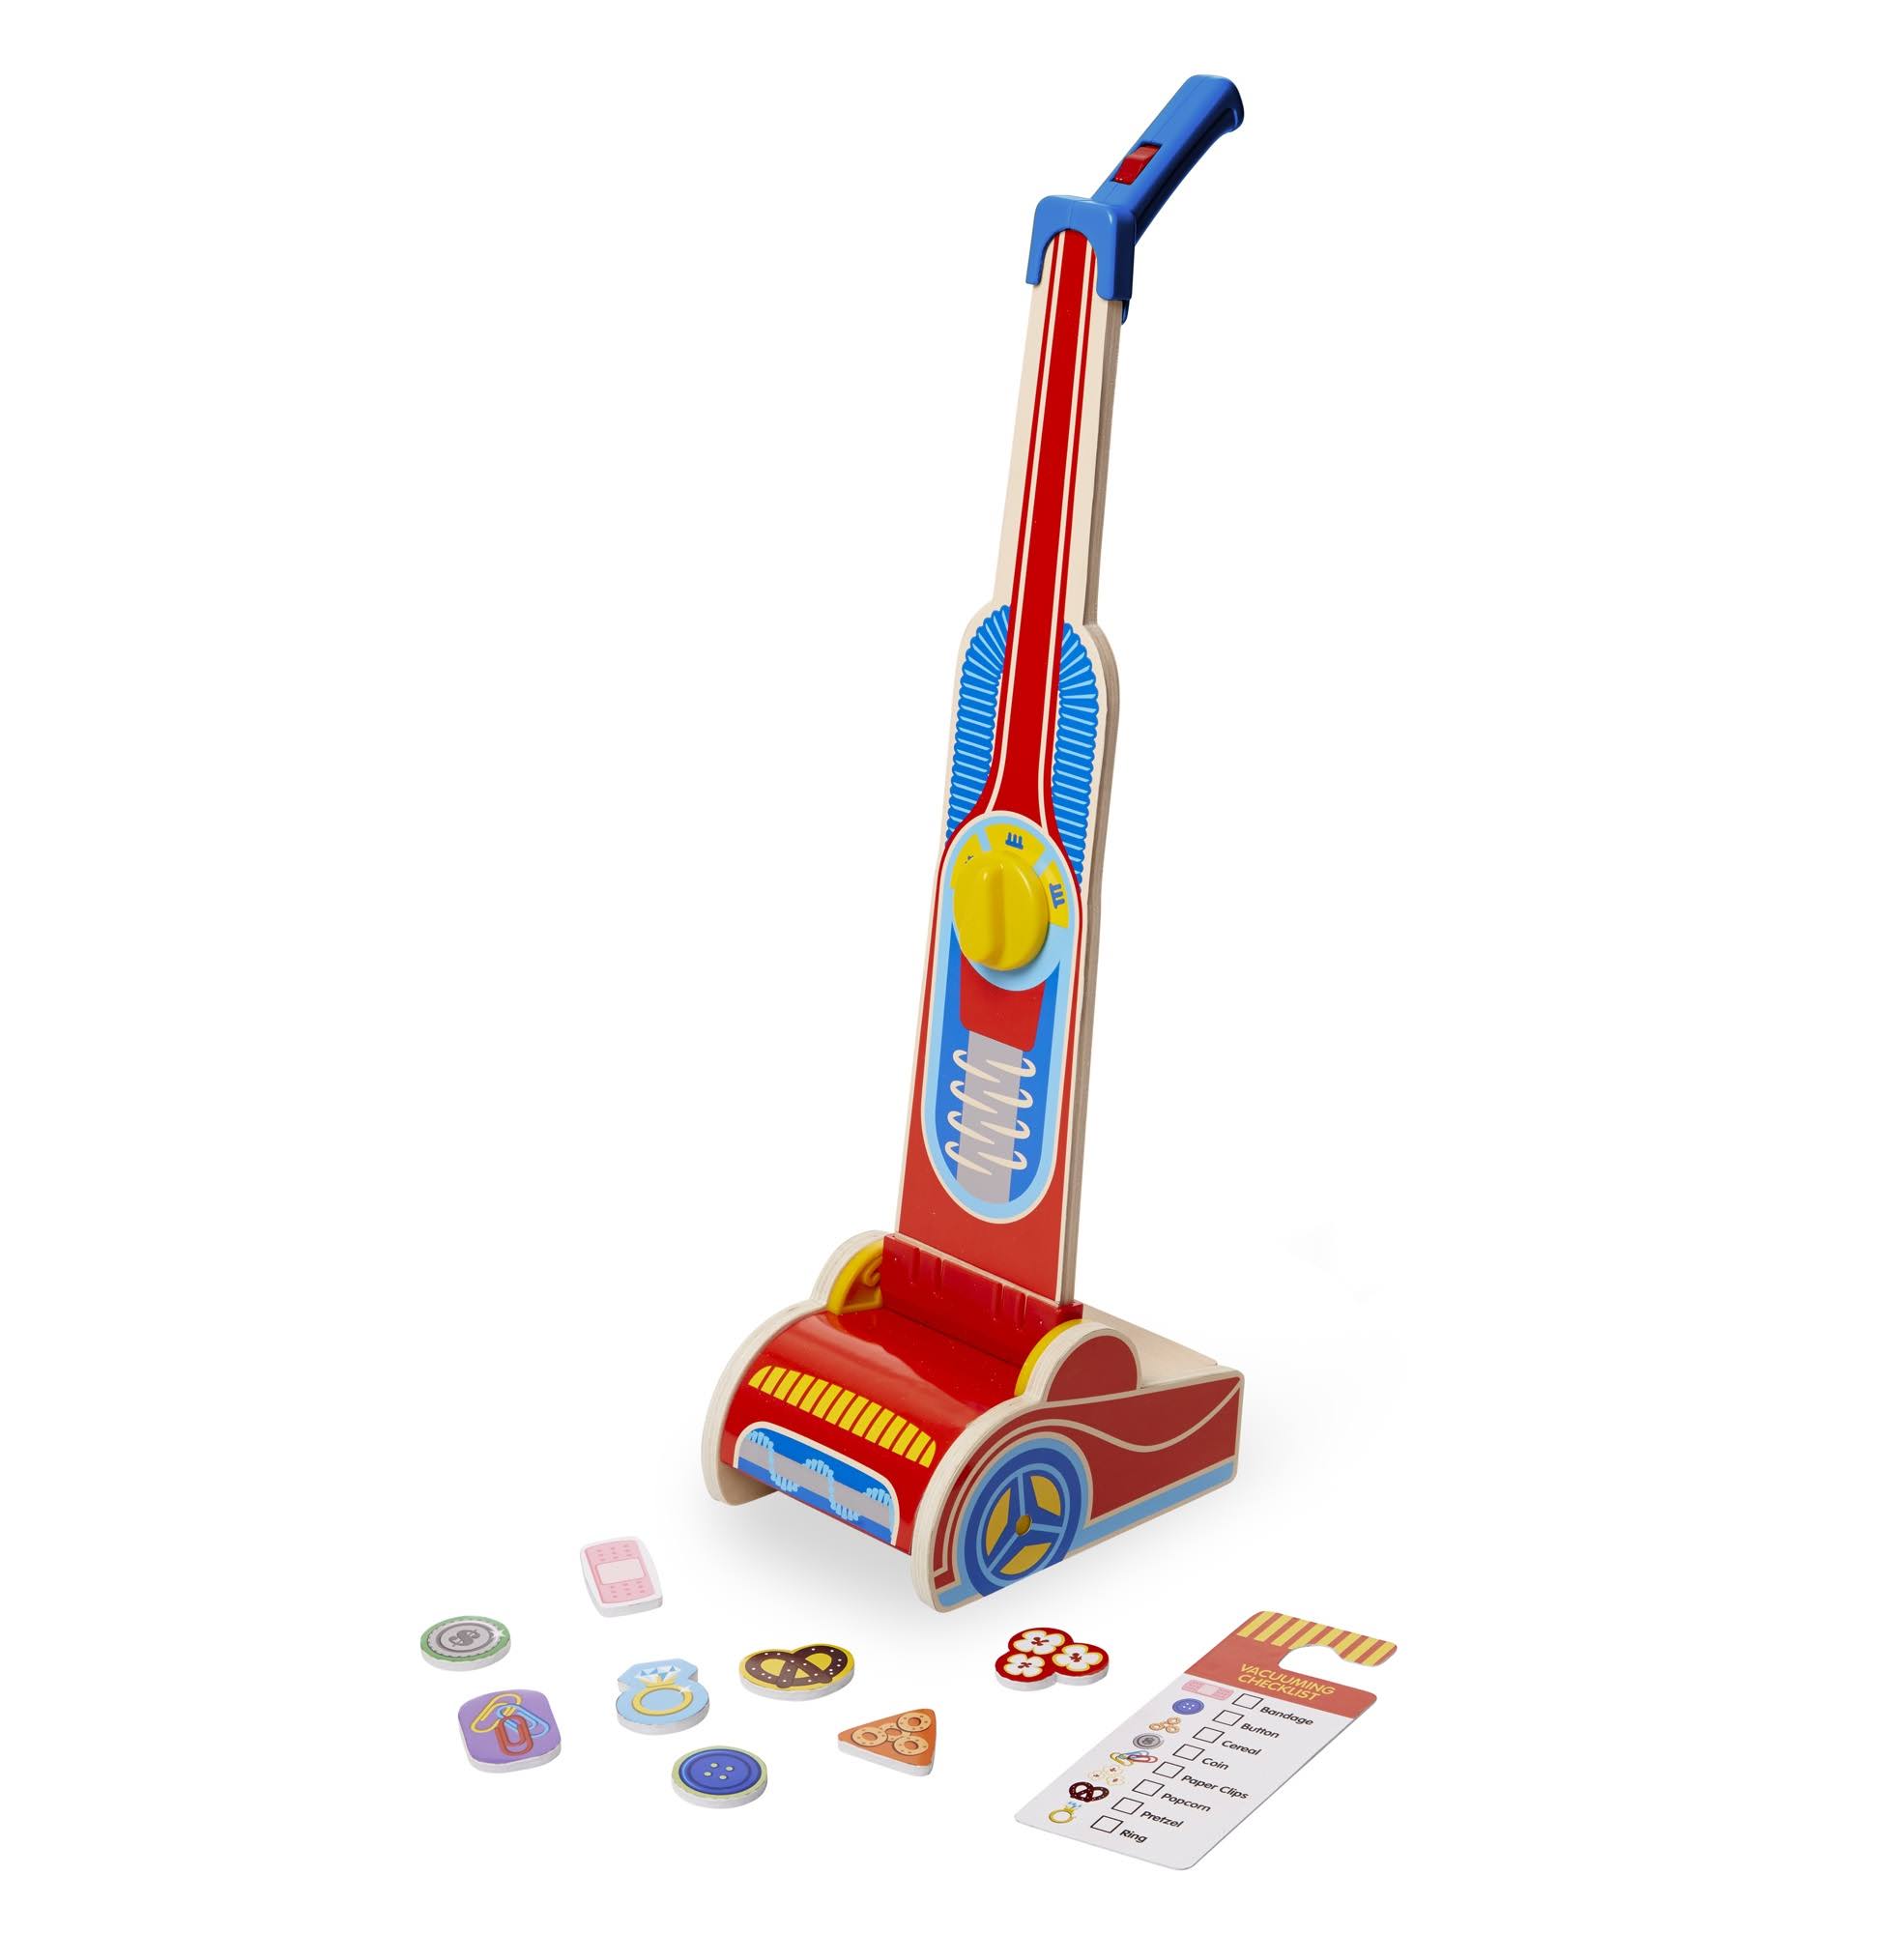 Melissa & Doug 5189 Wooden Vacuum Cleaner Play Set (10 pcs) Role Toy